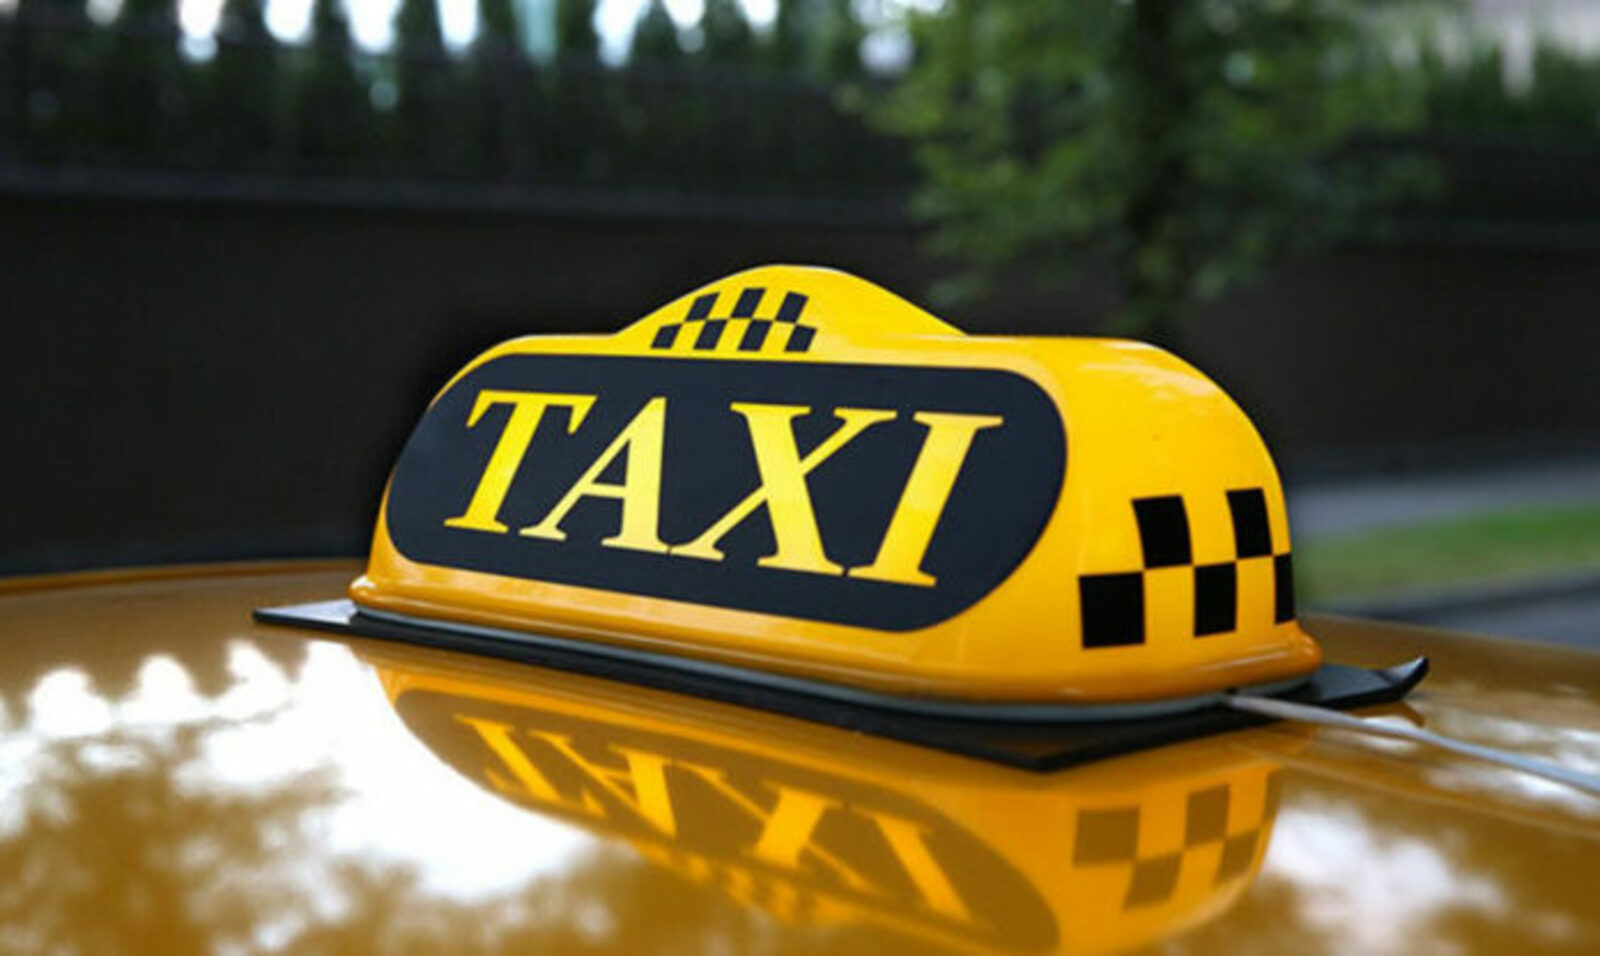 Такси свирск. Шашки такси. Шашечки такси. Шашка такси на машине. Такси картинки.